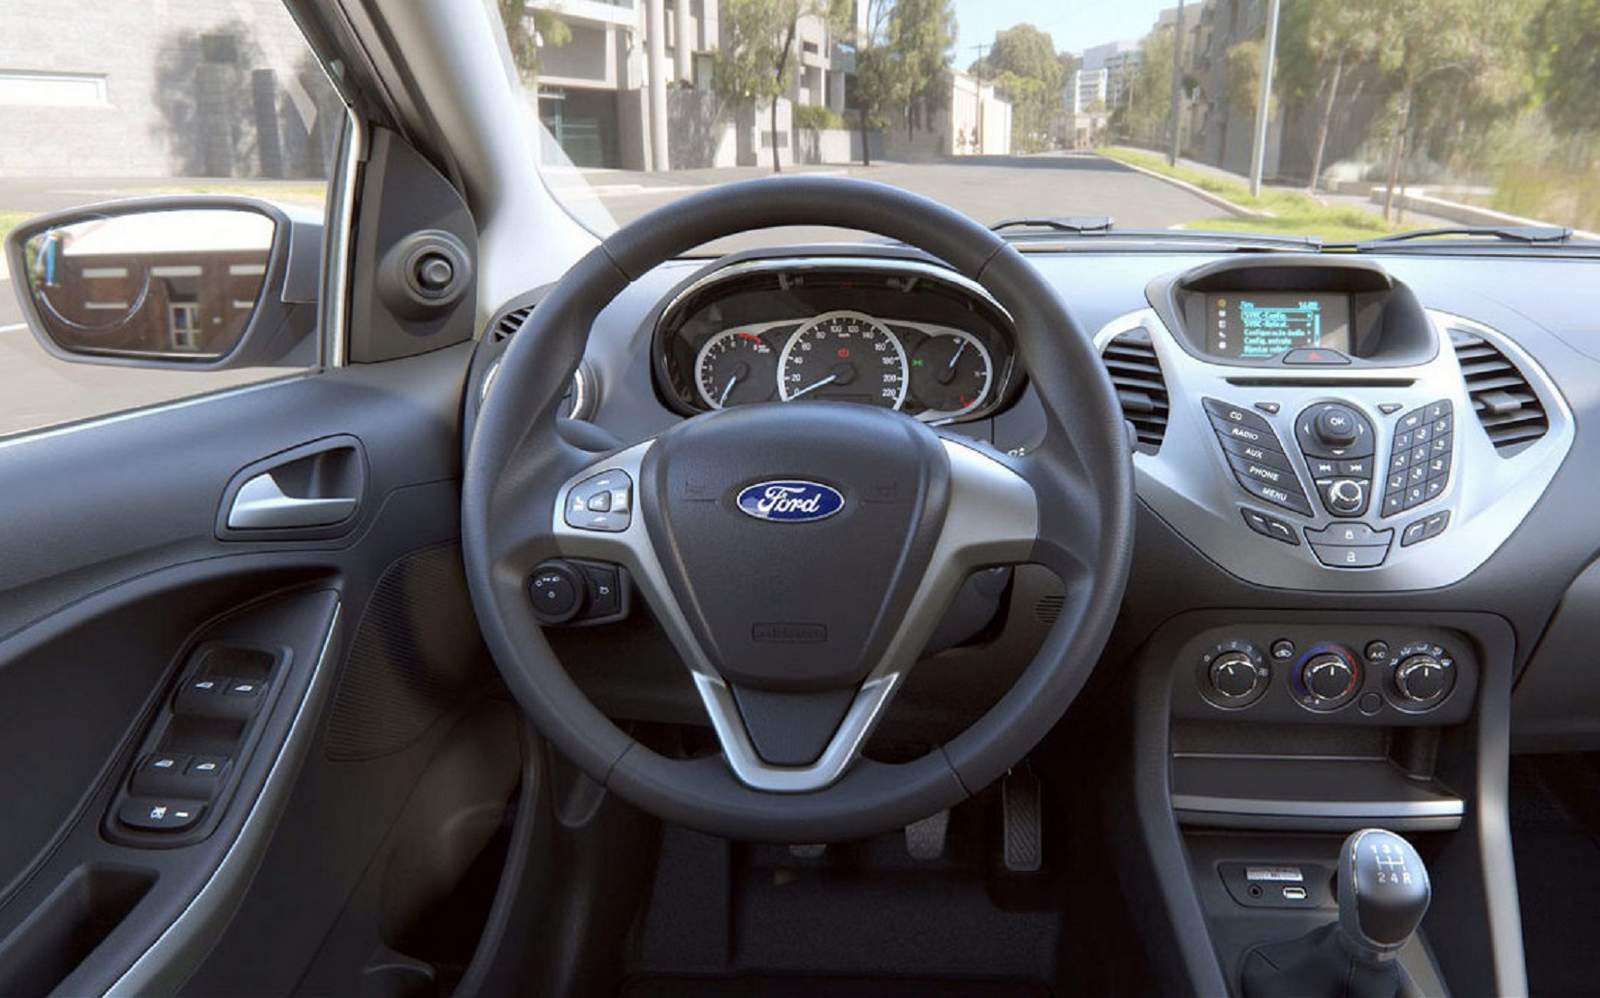 Novo Ford Ka 2015 - interior - painel